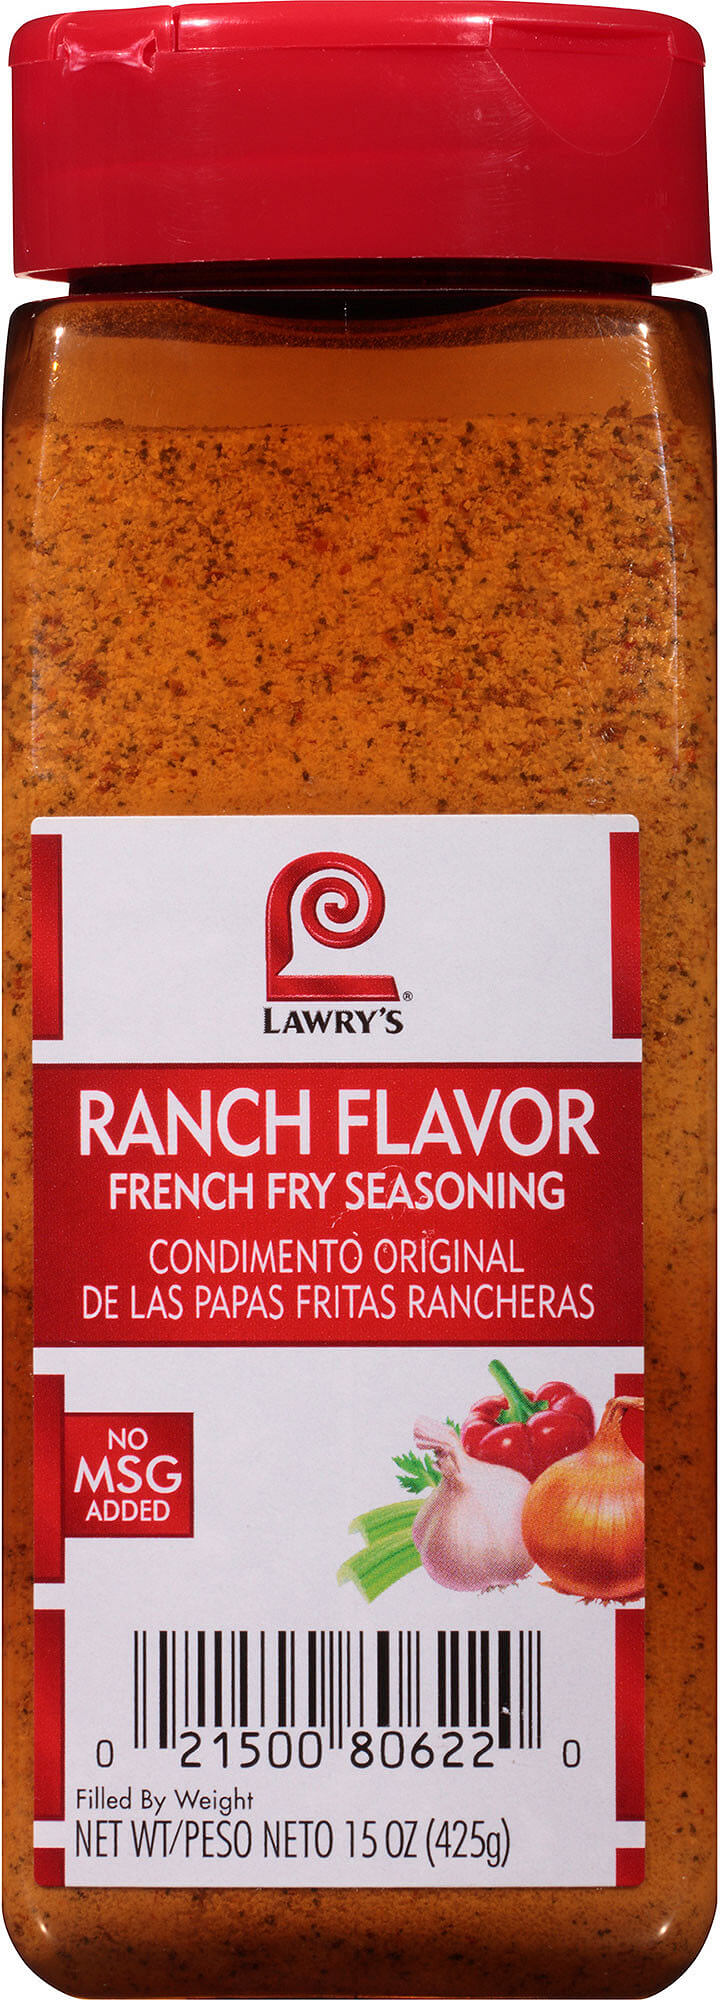 Lawry's 16 oz. Original French Fry Seasoning